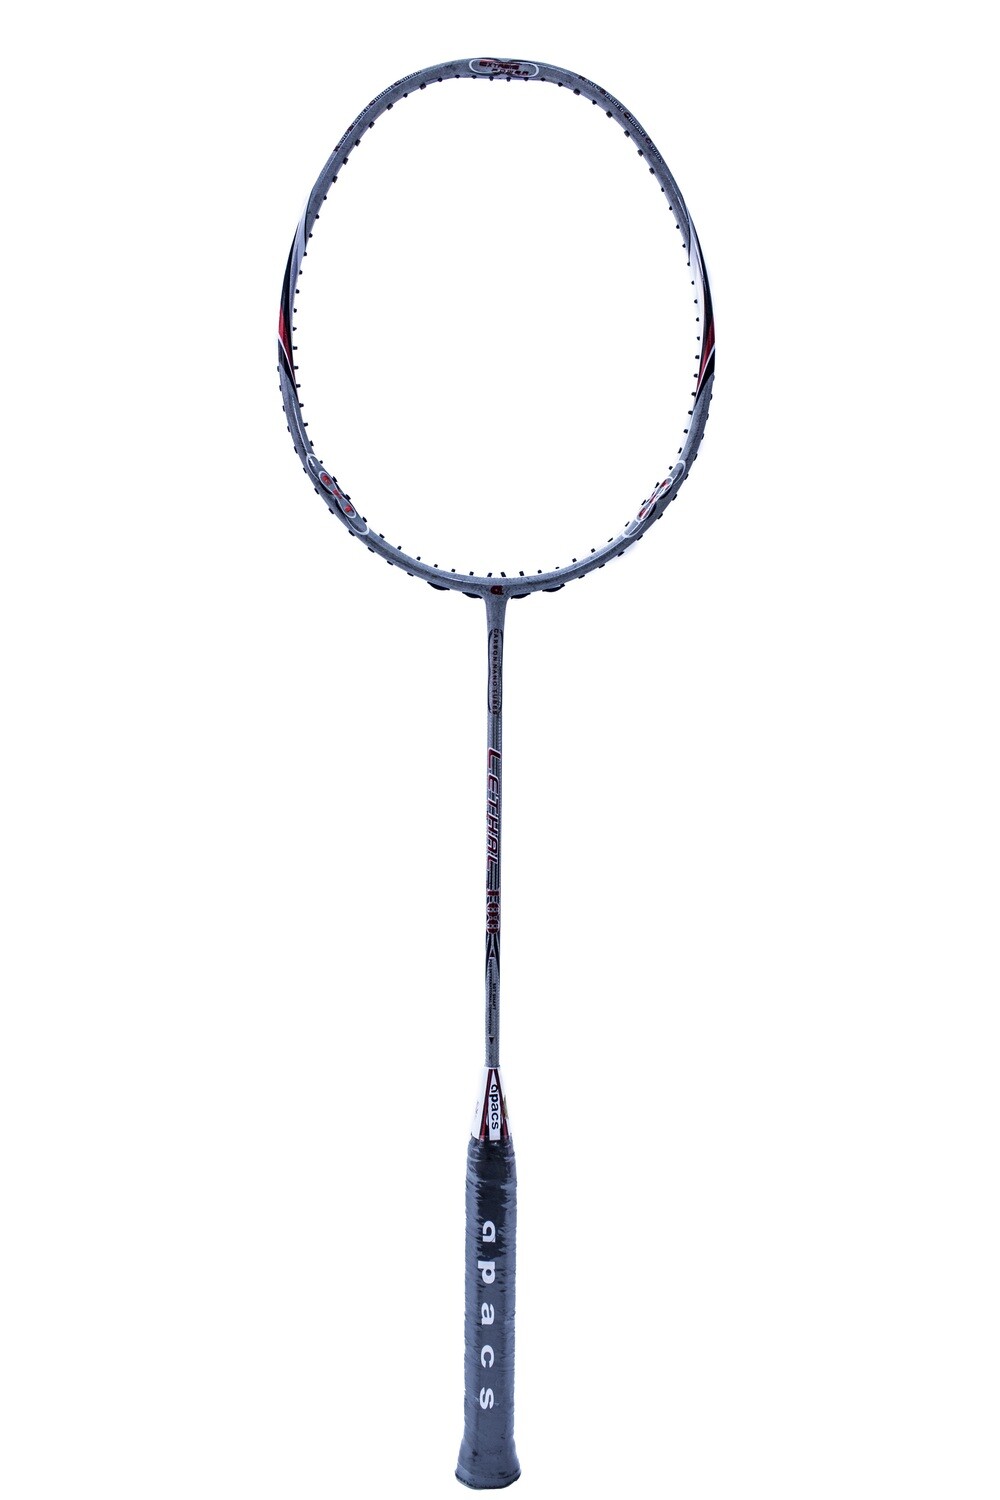 Apacs Lethal 100 Badminton Racquet